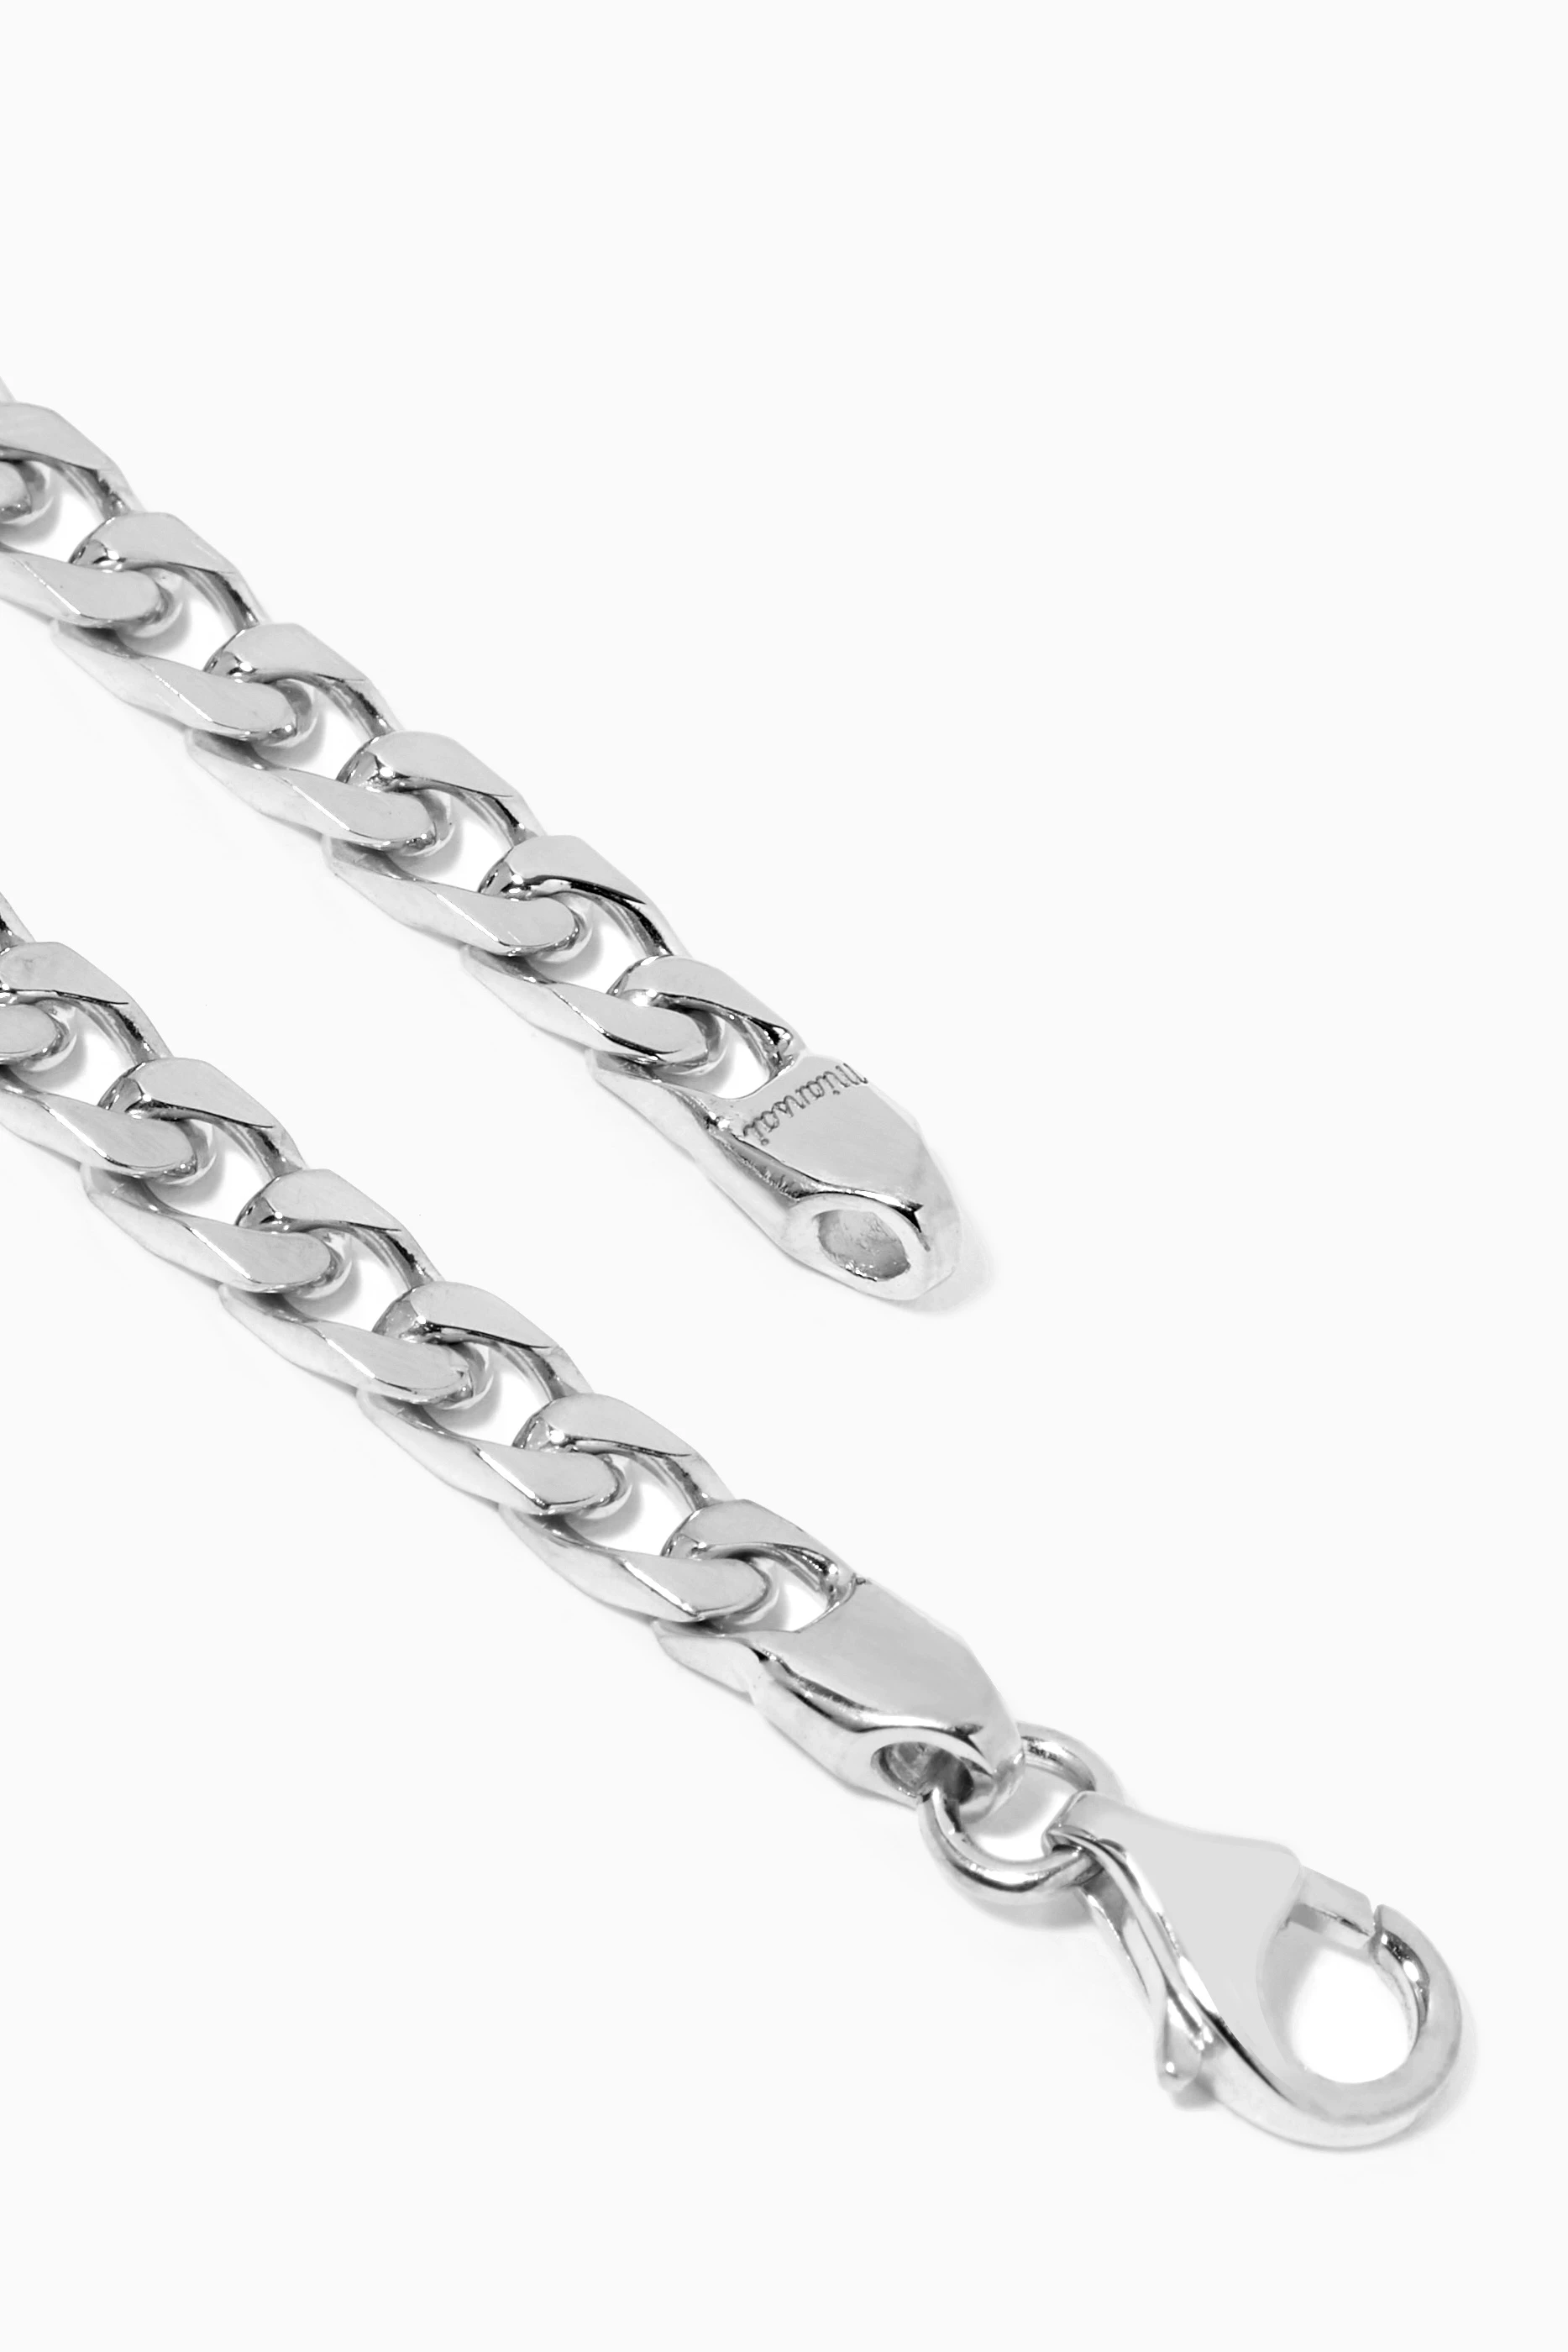 Miansai Men's 4mm Cuban Chain Bracelet, Silver, Medium